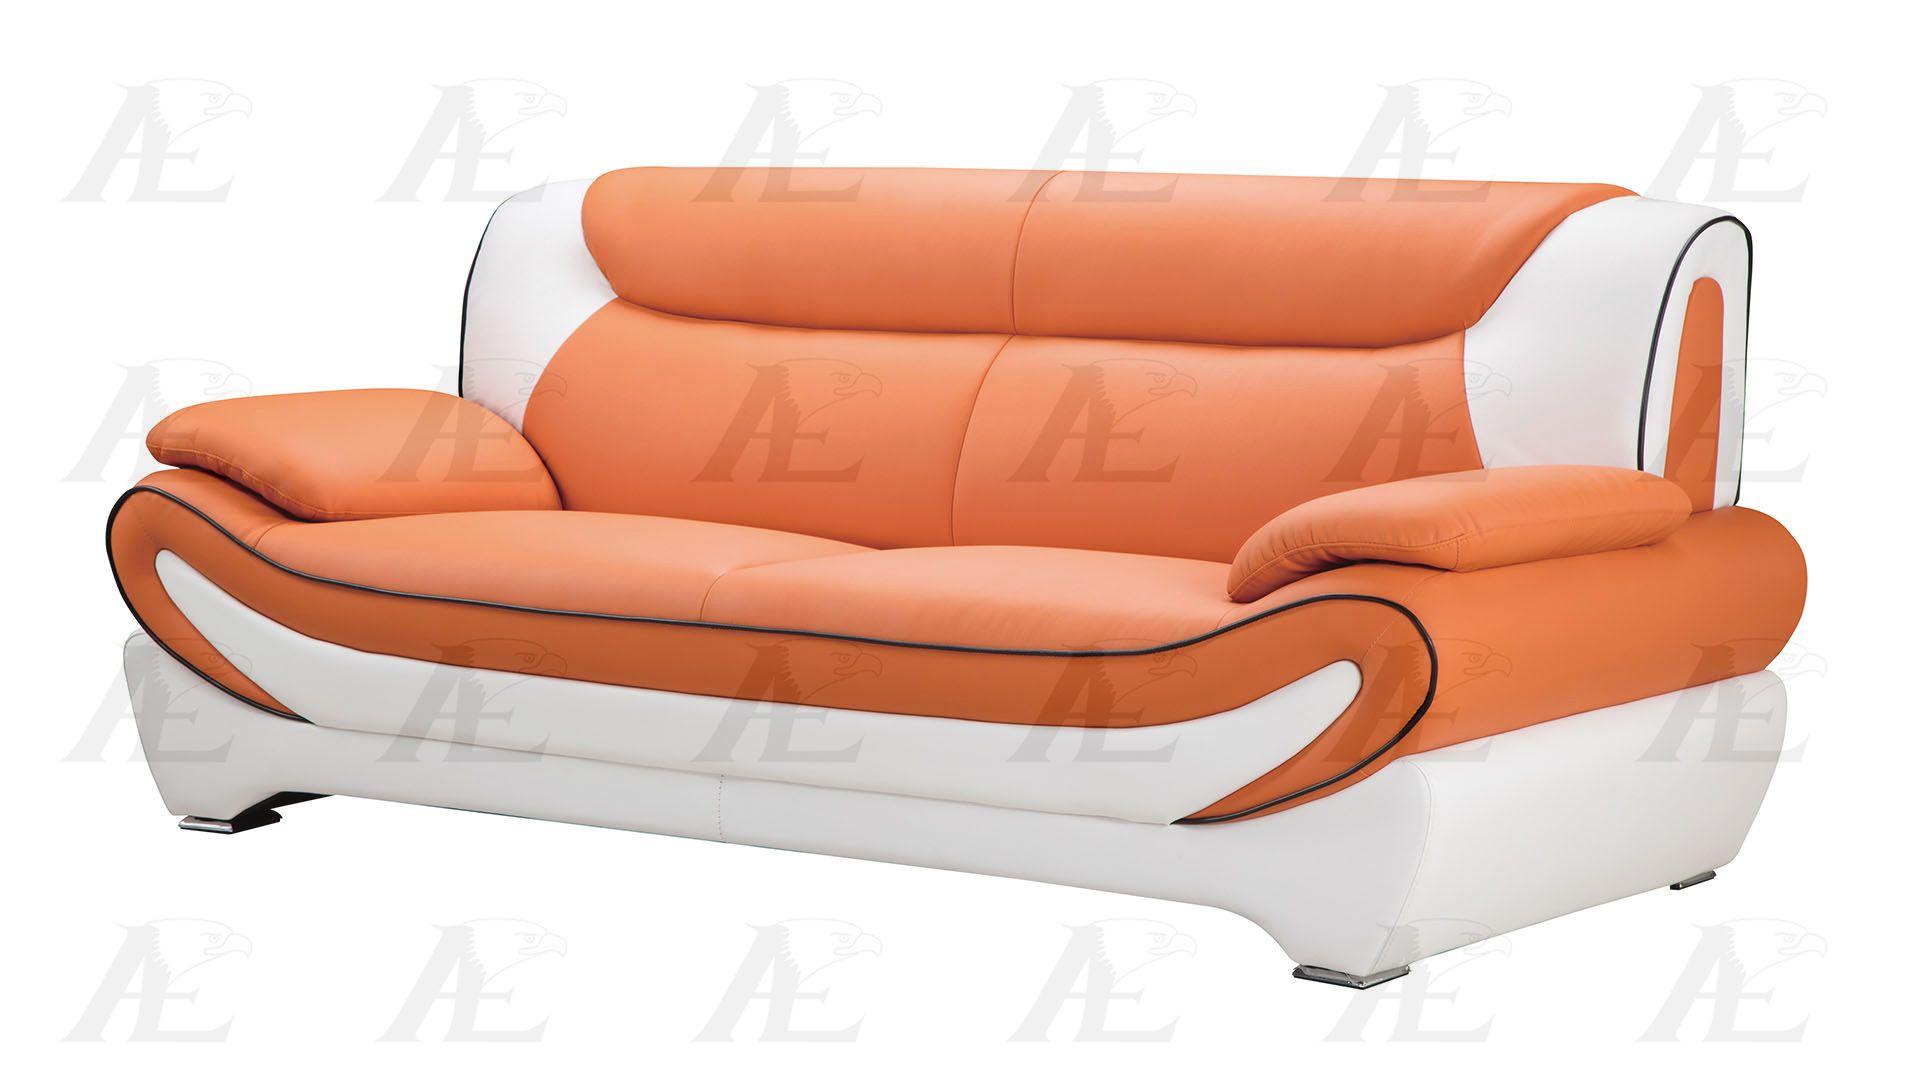 

    
American Eagle Furniture AE209-ORG.IV Sofa and Loveseat Set Ivory/Orange AE209-ORG.IV 3Pcs
